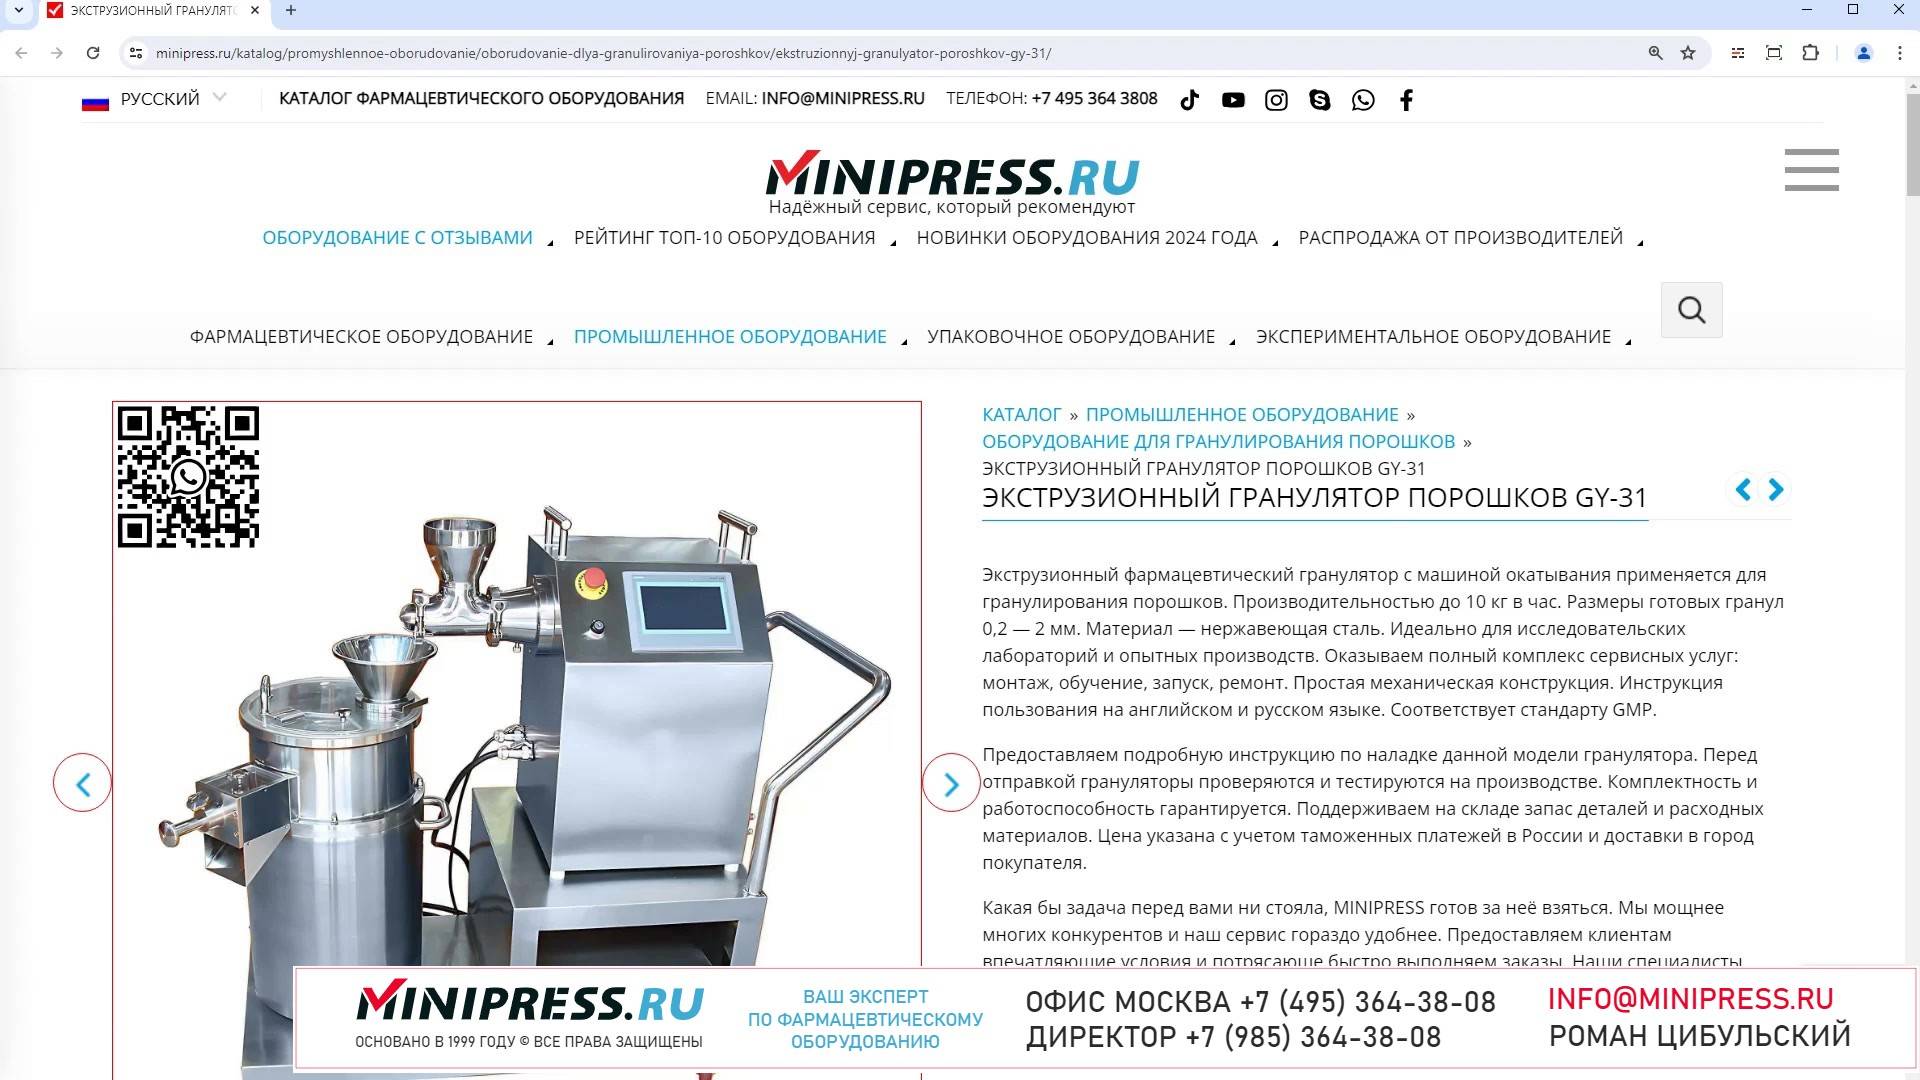 Minipress.ru Экструзионный гранулятор порошков GY-31